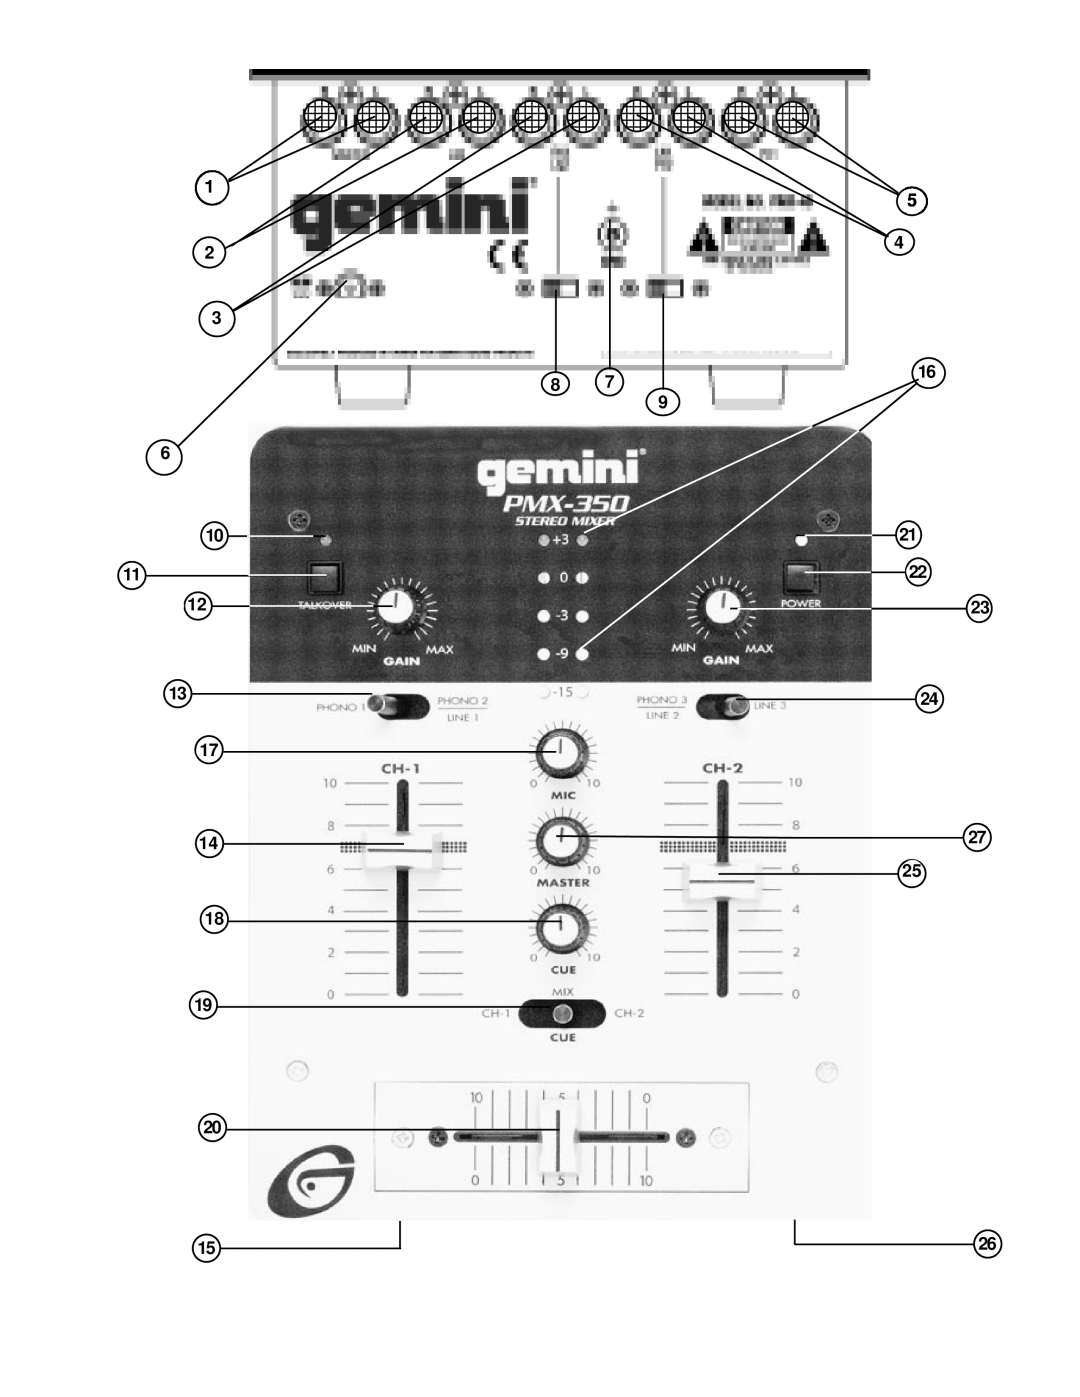 Gemini PMX-350 manual 1 2 3 6 10 131 123 13 197, 5 4 16, Page 